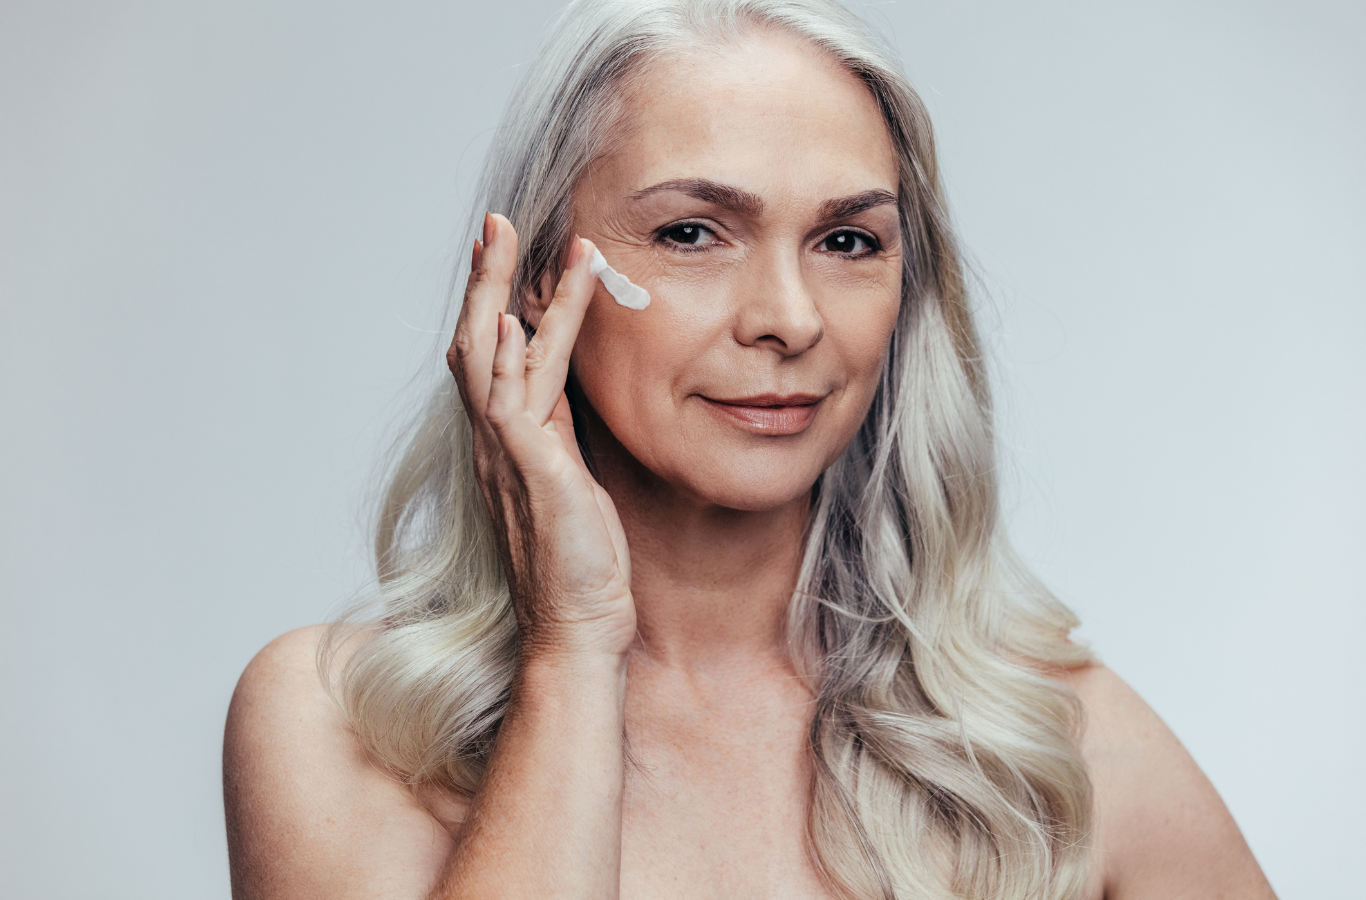 The Best Collagen for Women Over 50: Top 5 ProductsThe Best Collagen for Women Over 50: Top 5 Products